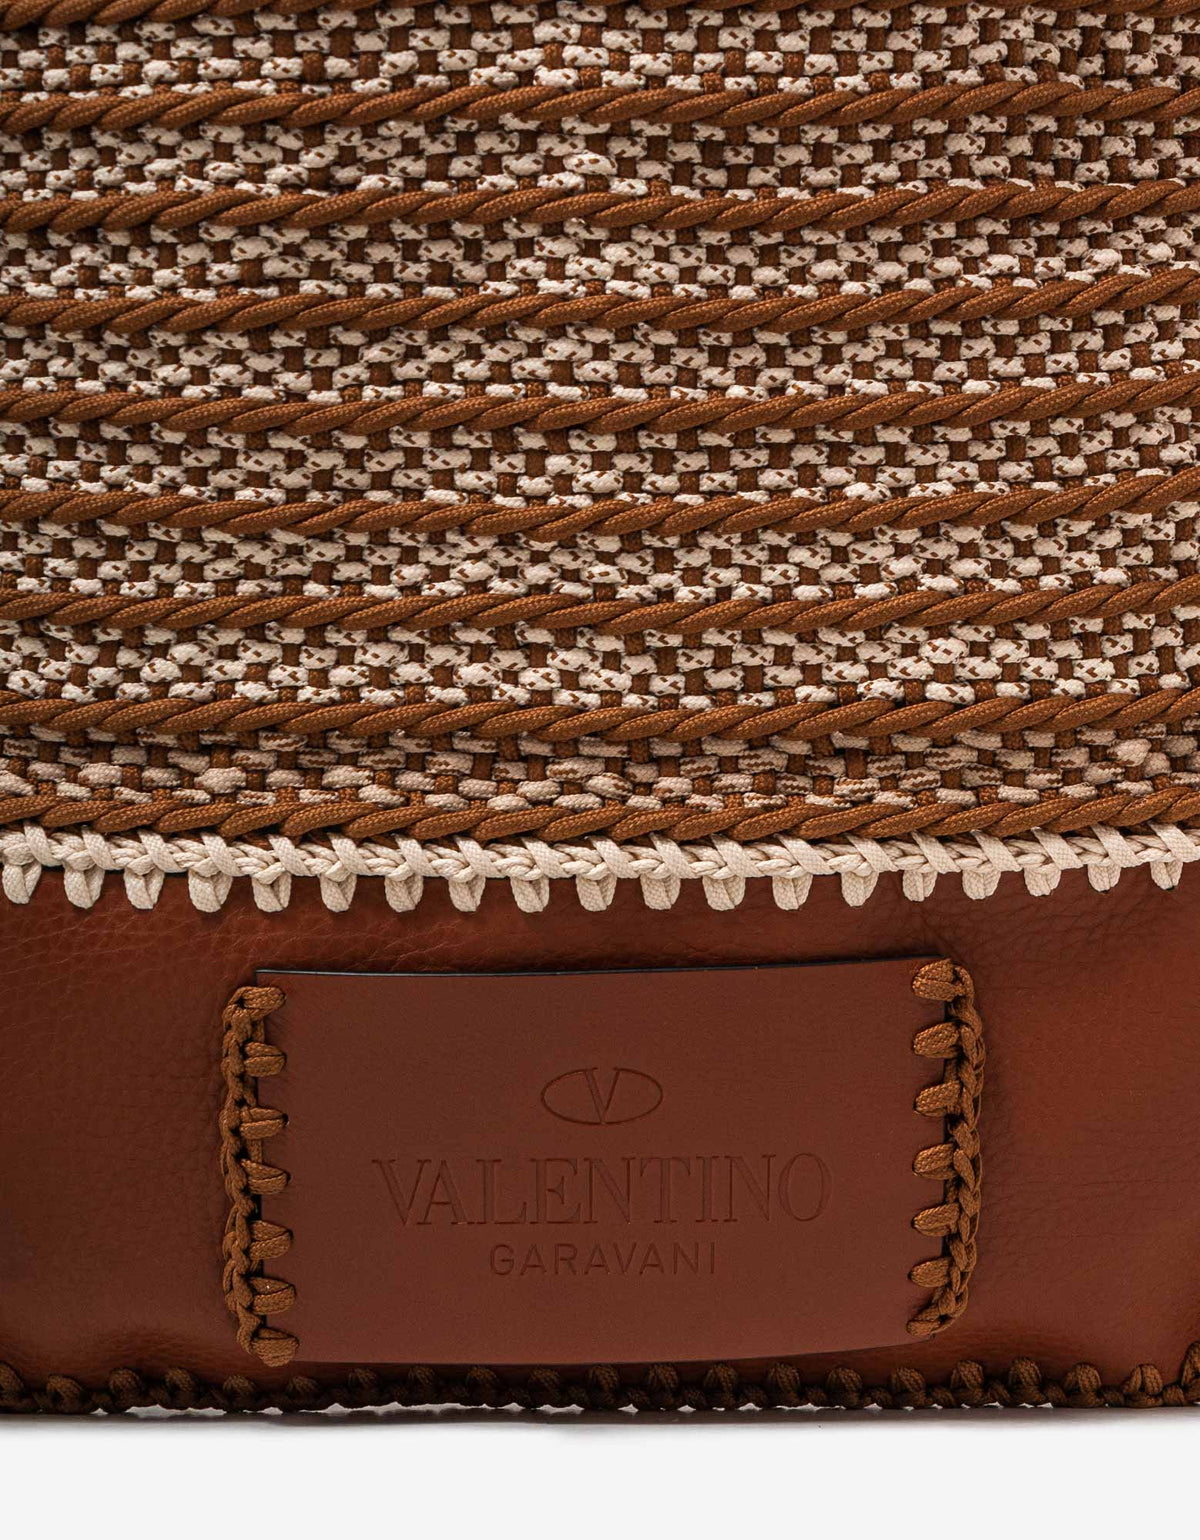 Valentino Garavani Brown Leather and Crochet Tote Bag